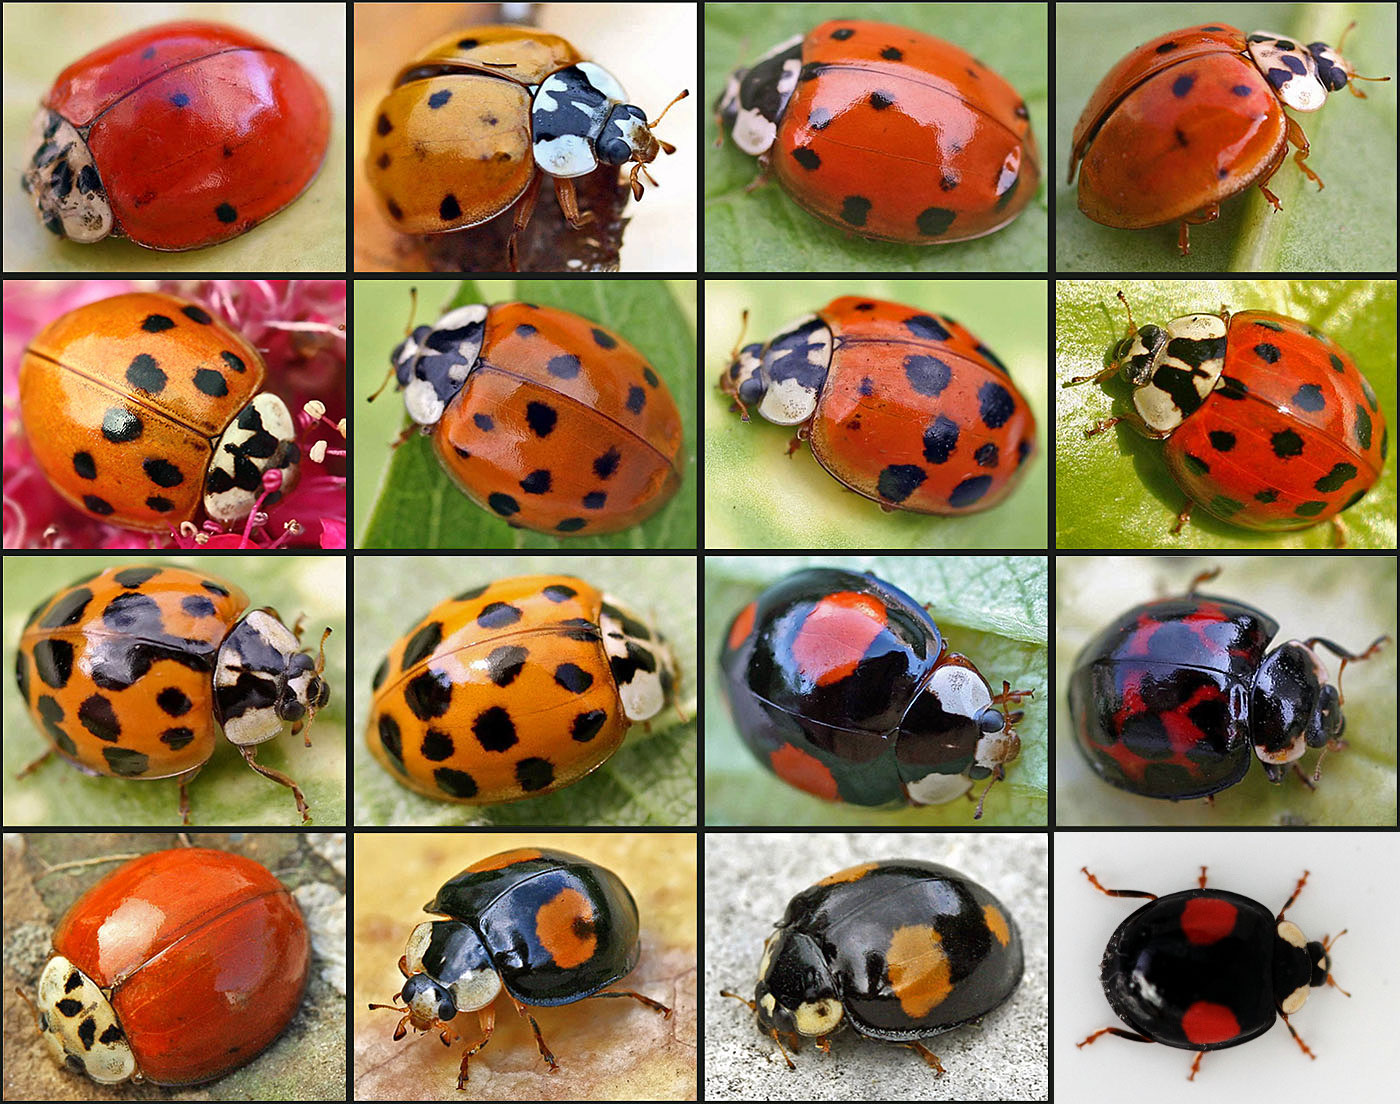 Do all ladybugs have black spots on them?